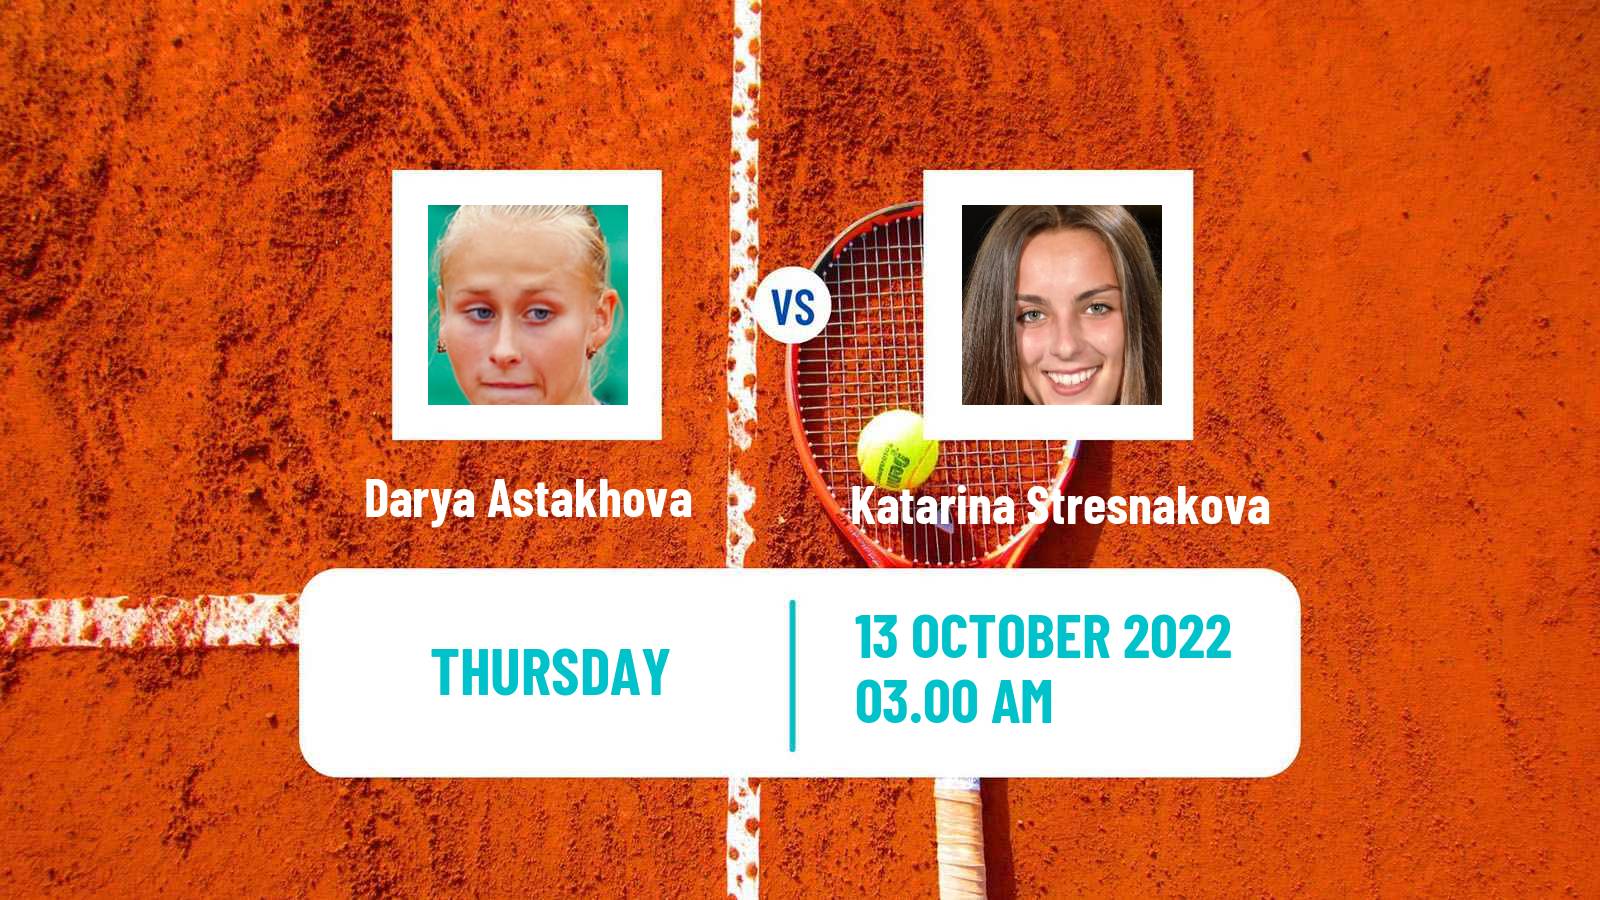 Tennis ITF Tournaments Darya Astakhova - Katarina Stresnakova